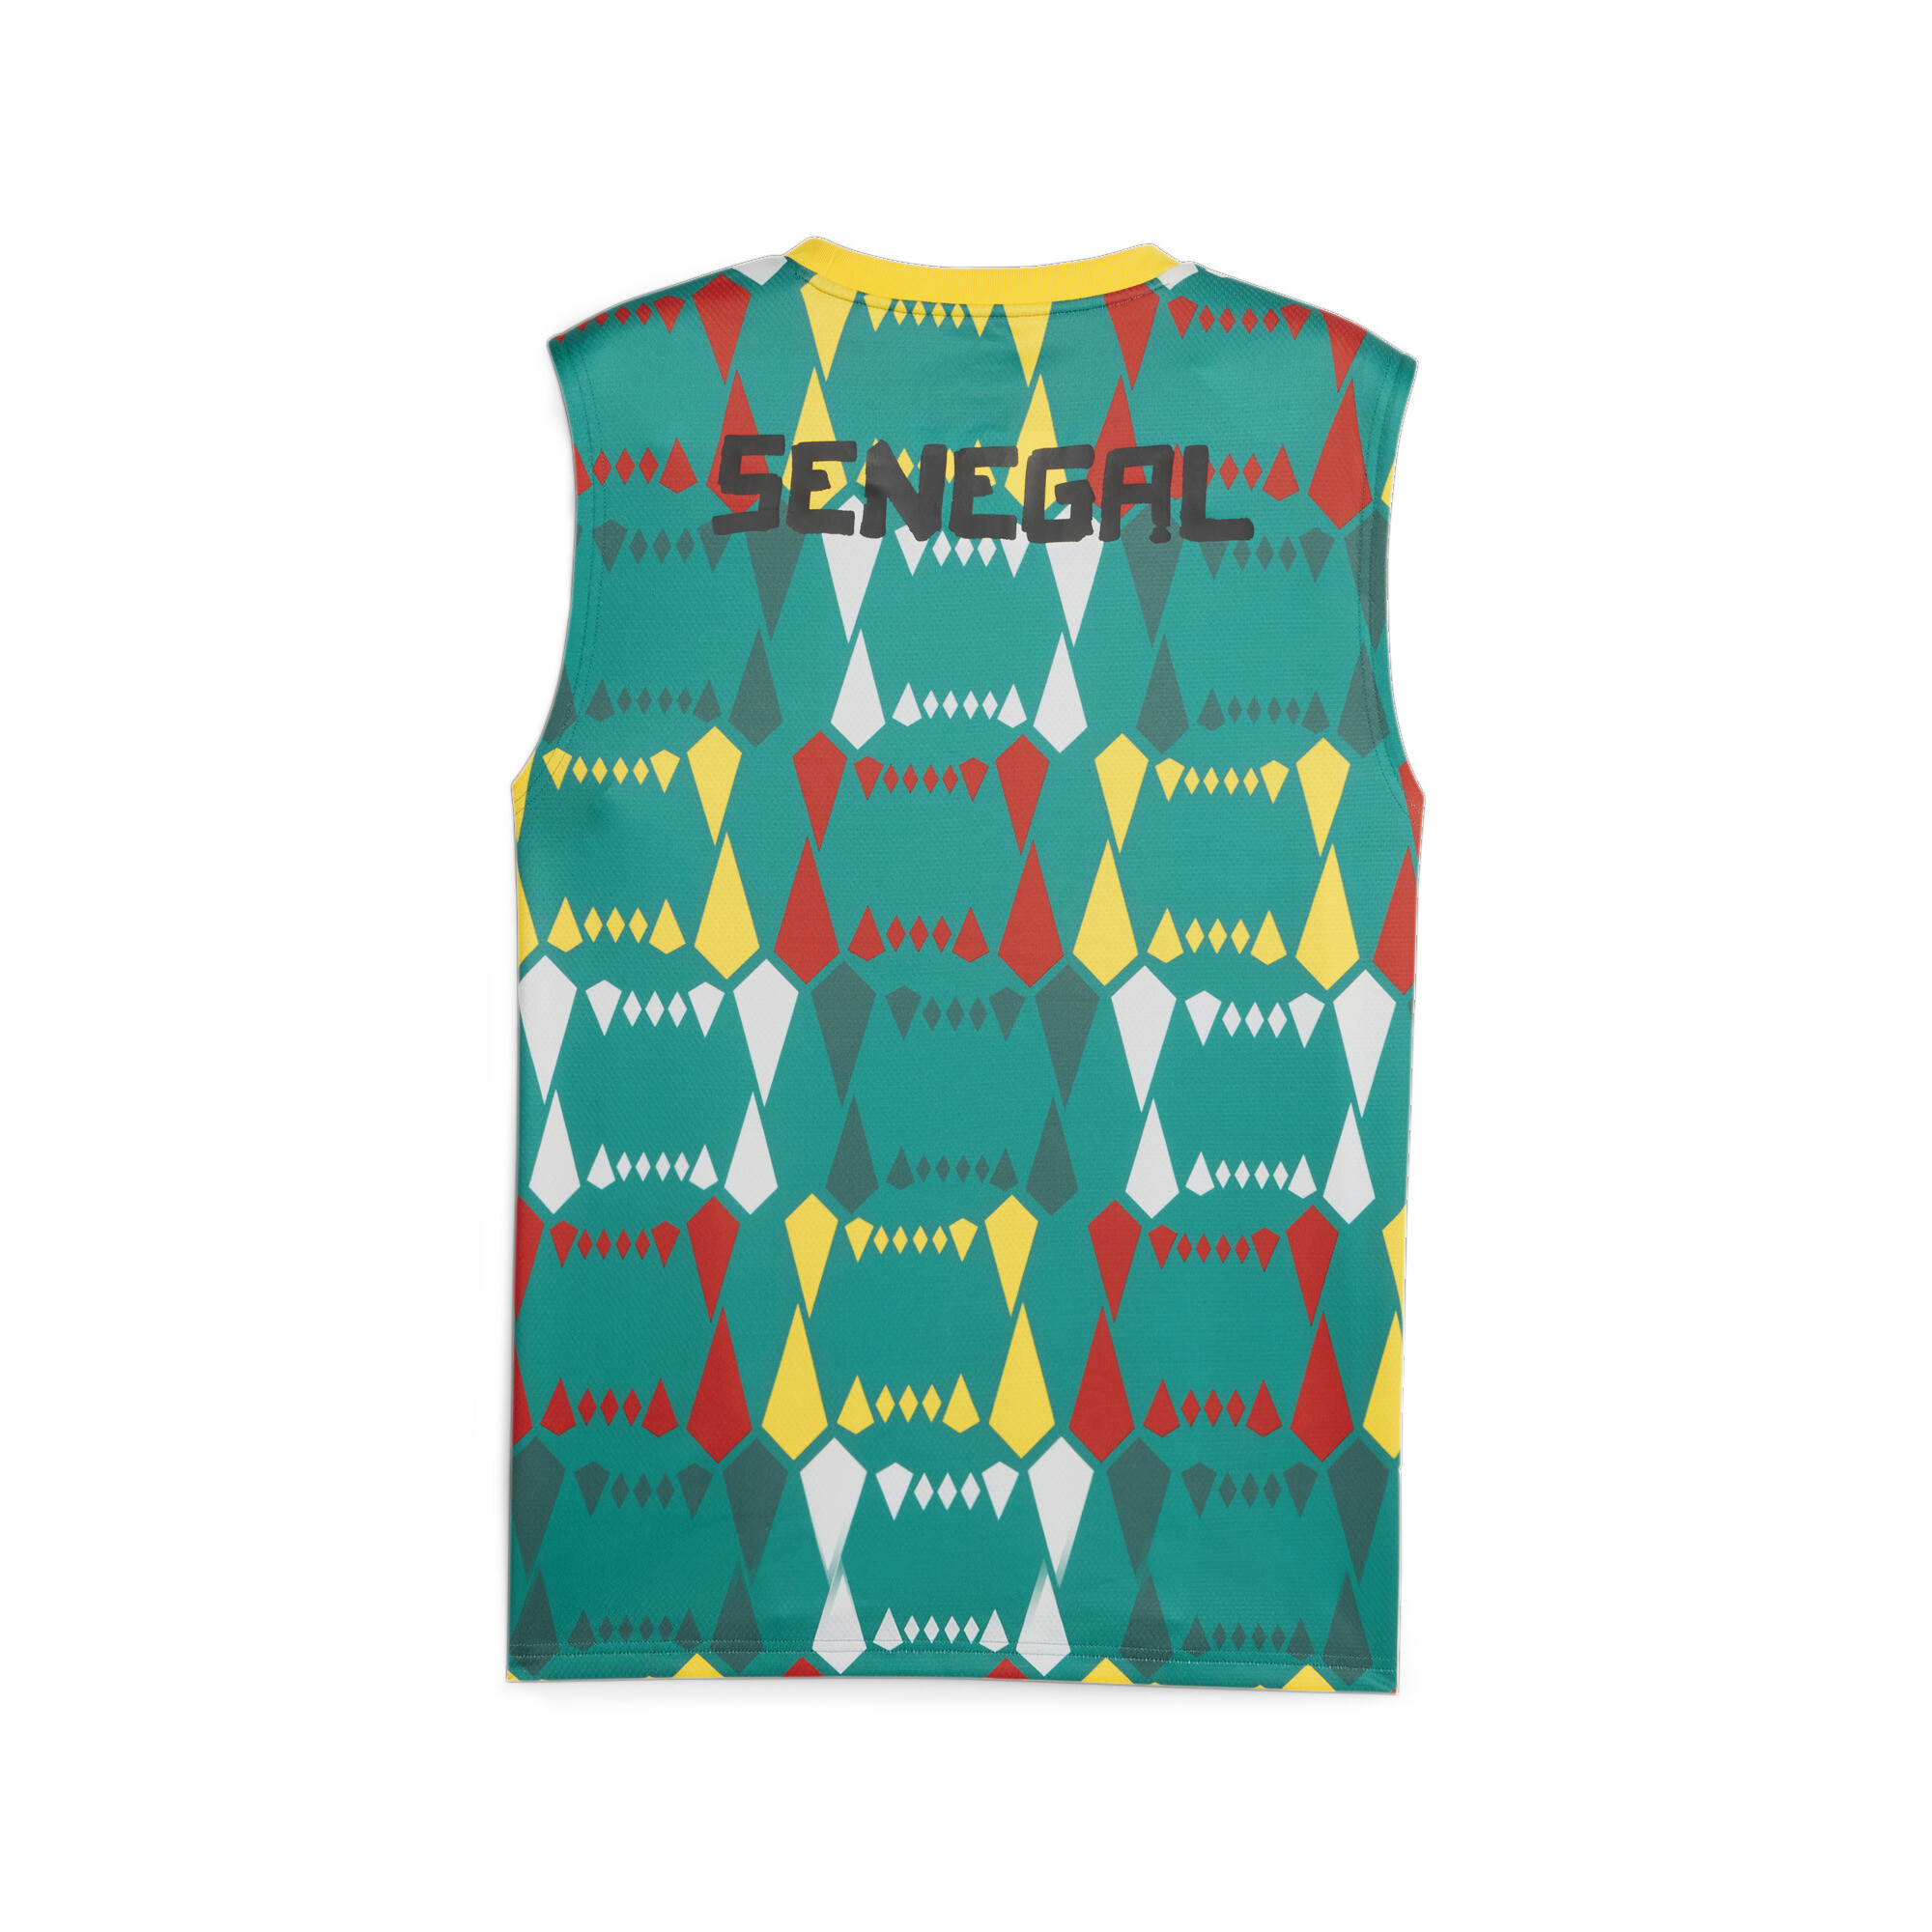 Men's PUMA Senegal FtblCulture Sleeveless Jersey In Green, Size 2XL